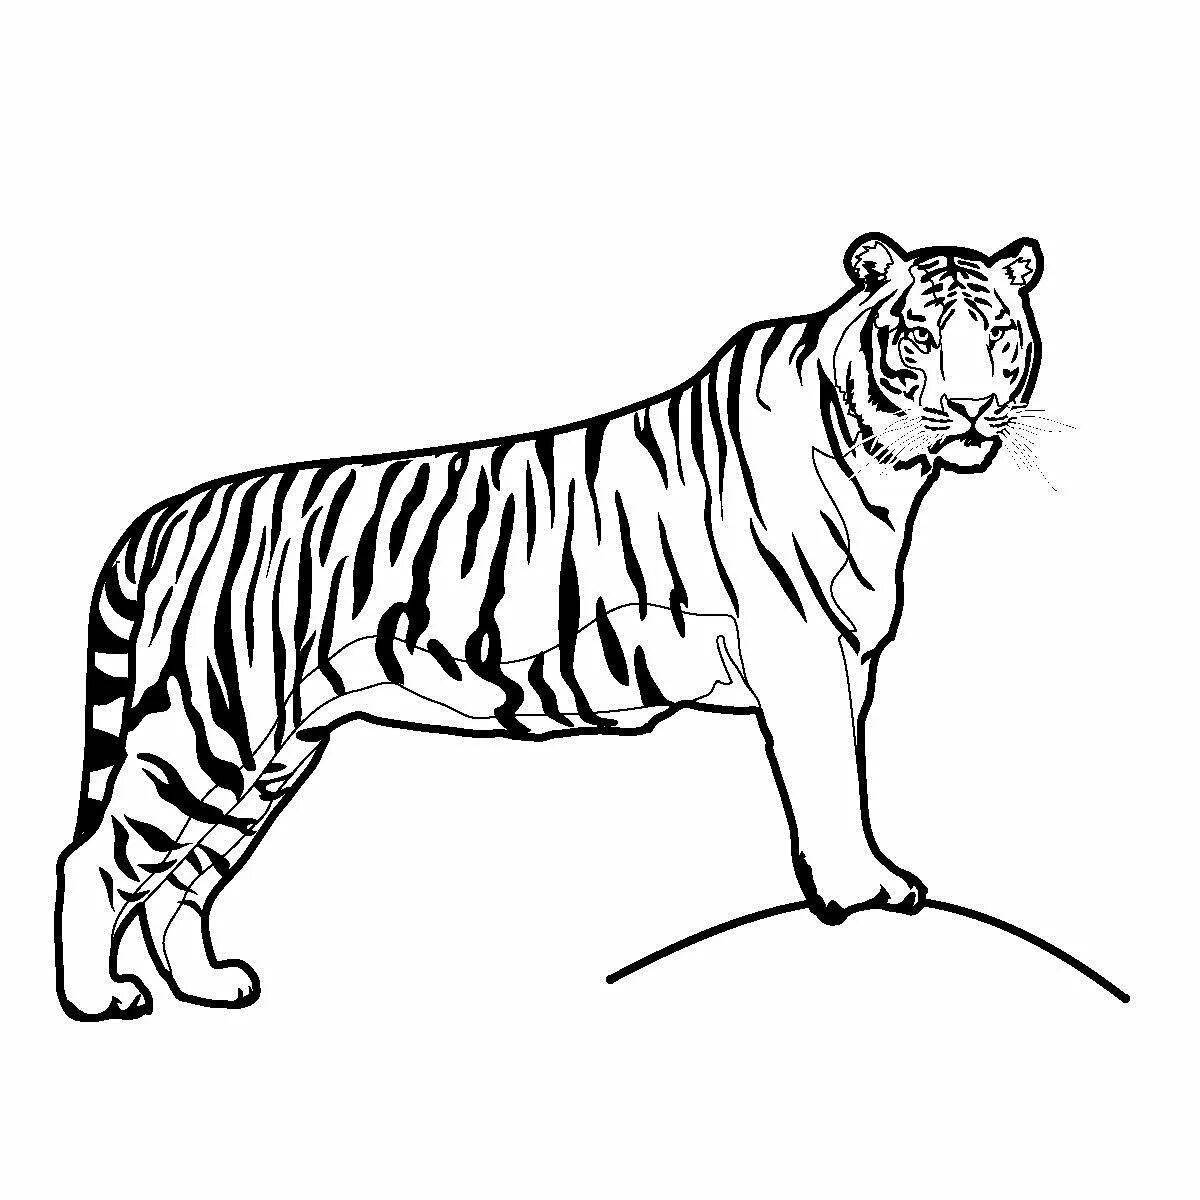 Great siberian tiger coloring book